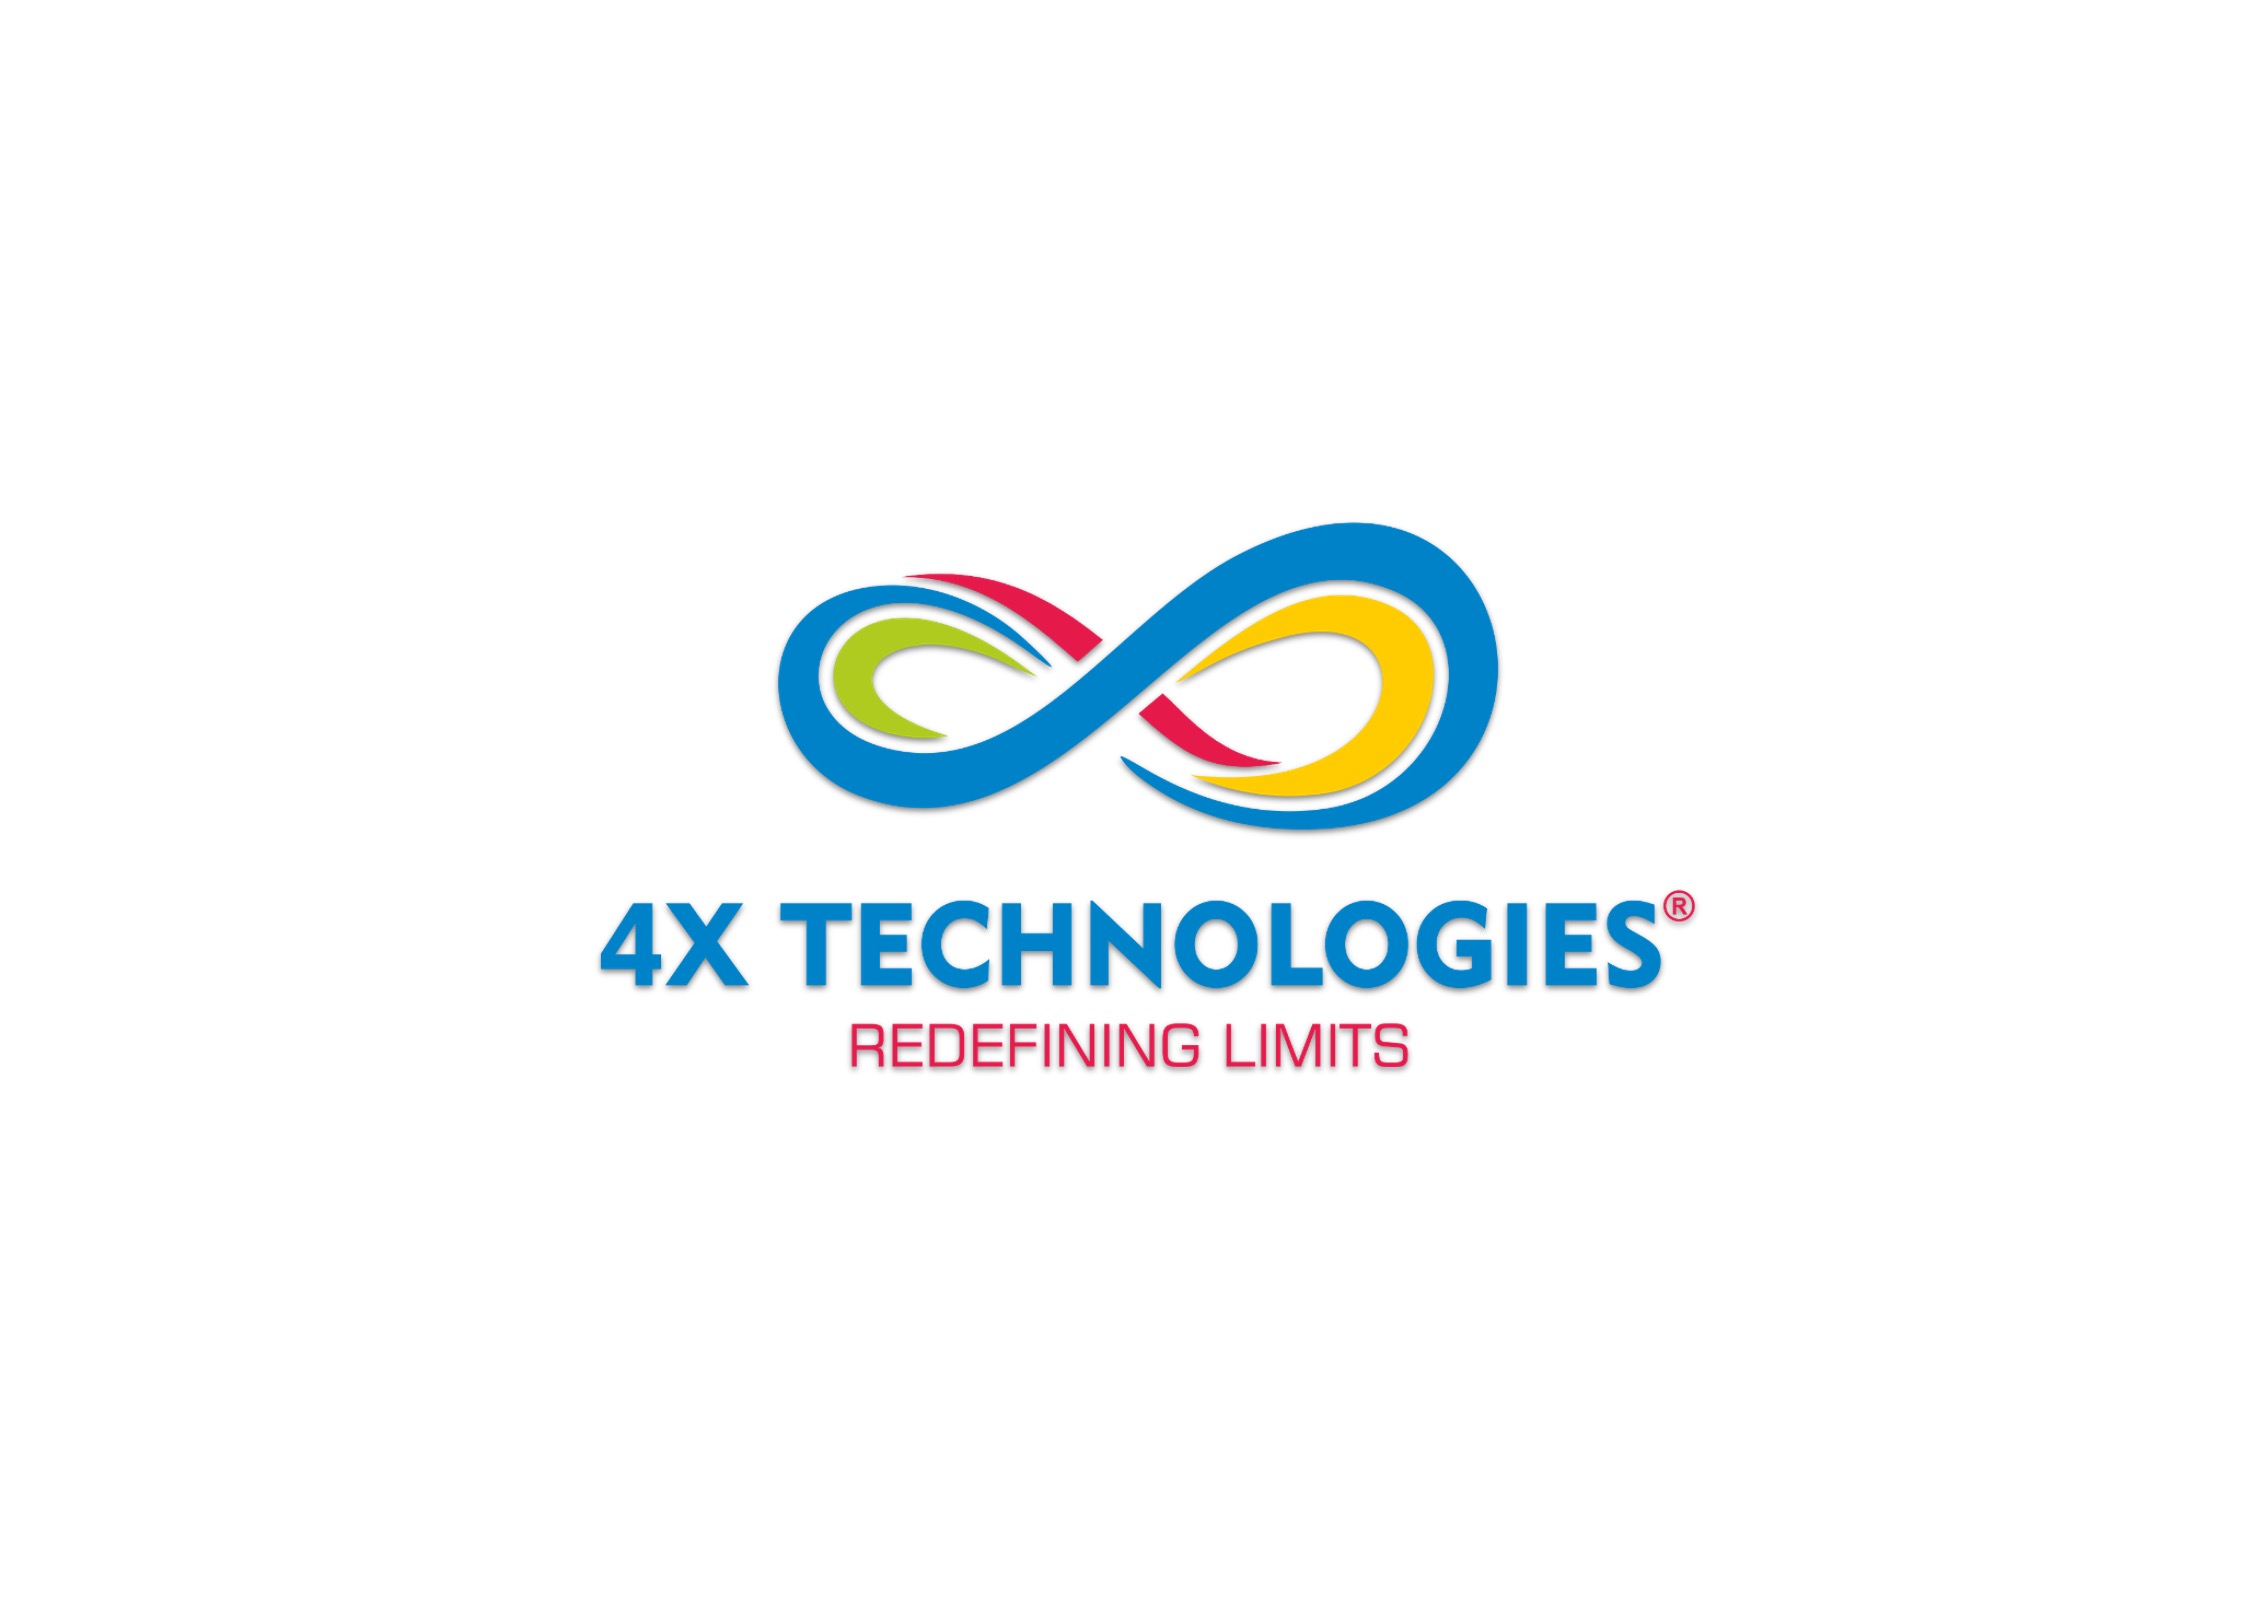 4X Technologies Pvt Ltd in Elioplus